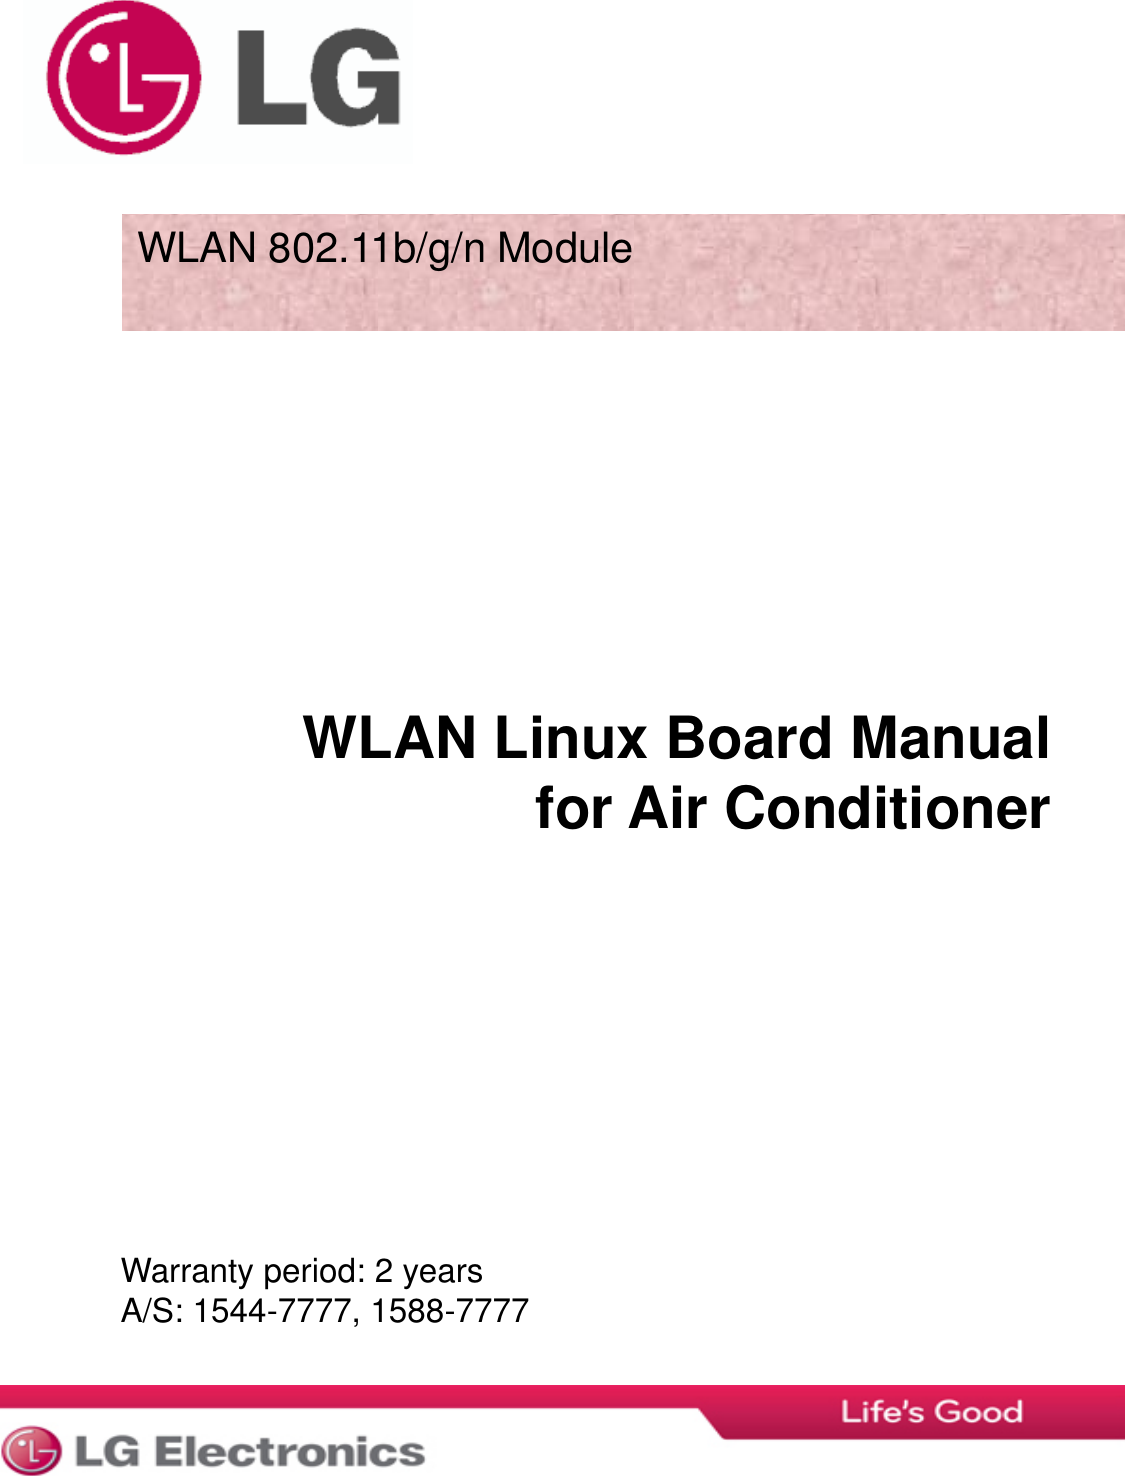 WLAN 802.11b/g/n ModuleWLAN Linux Board Manualfor Air ConditionerWarranty period: 2 yearsA/S: 1544-7777, 1588-7777